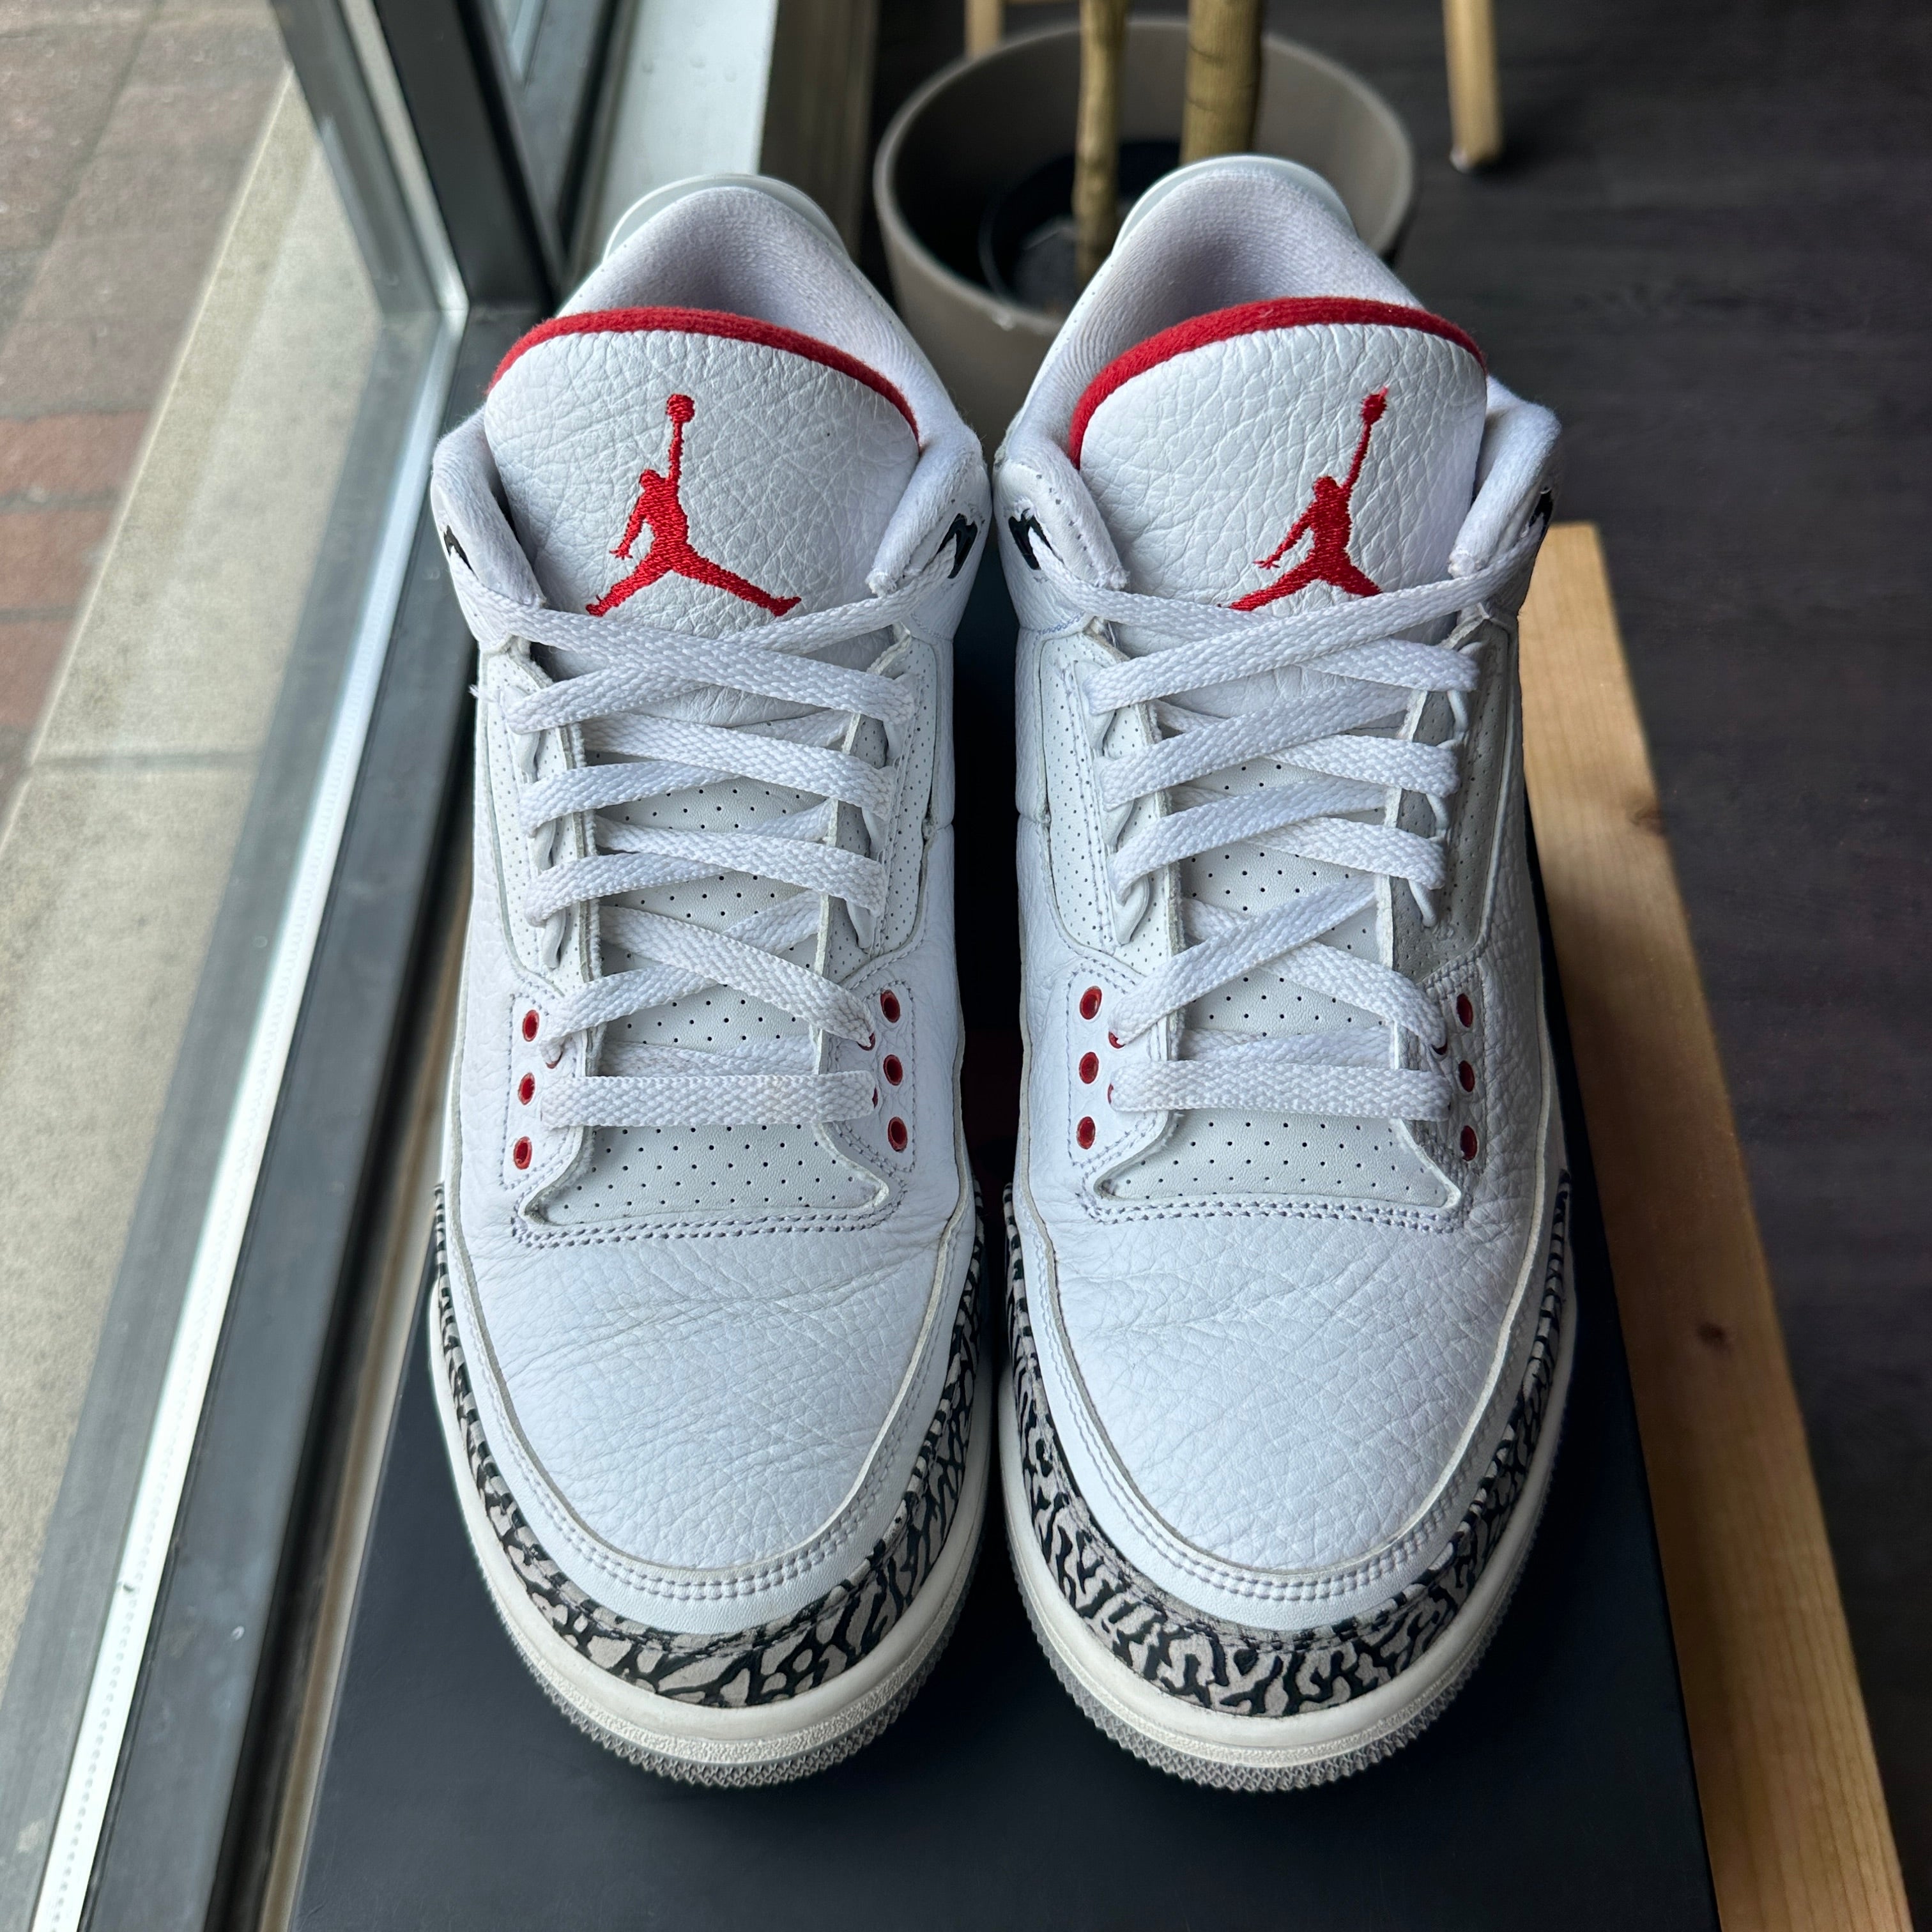 Air Jordan 3 "Hall of Fame" Size 10